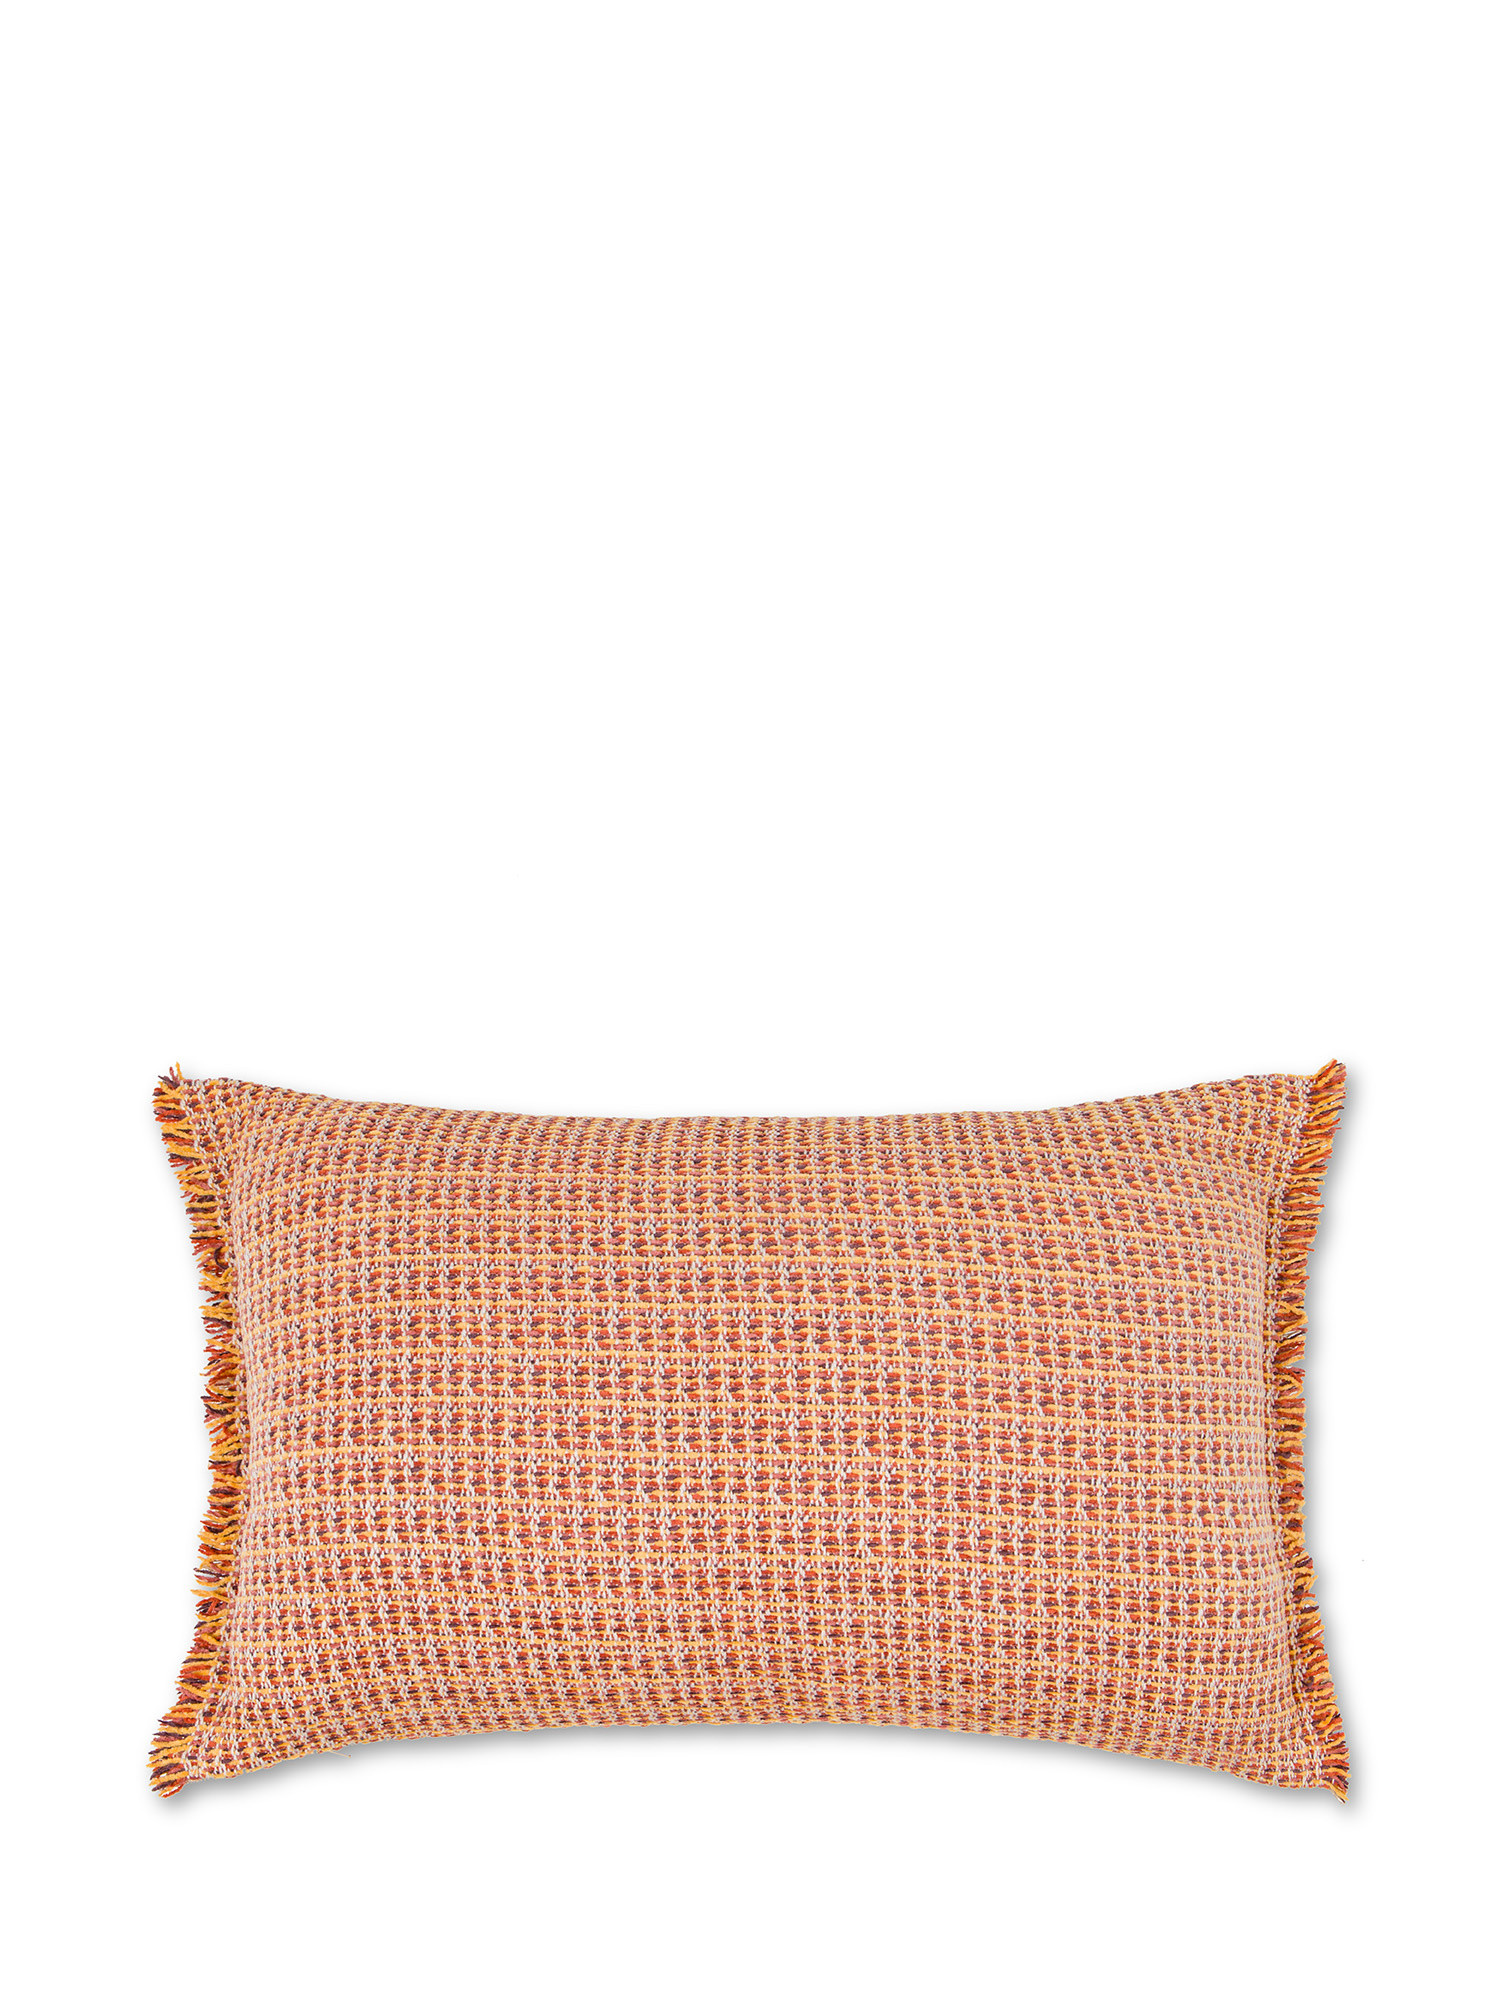 Cuscino maglia jacquard con frange 35X55cm, Arancione, large image number 0